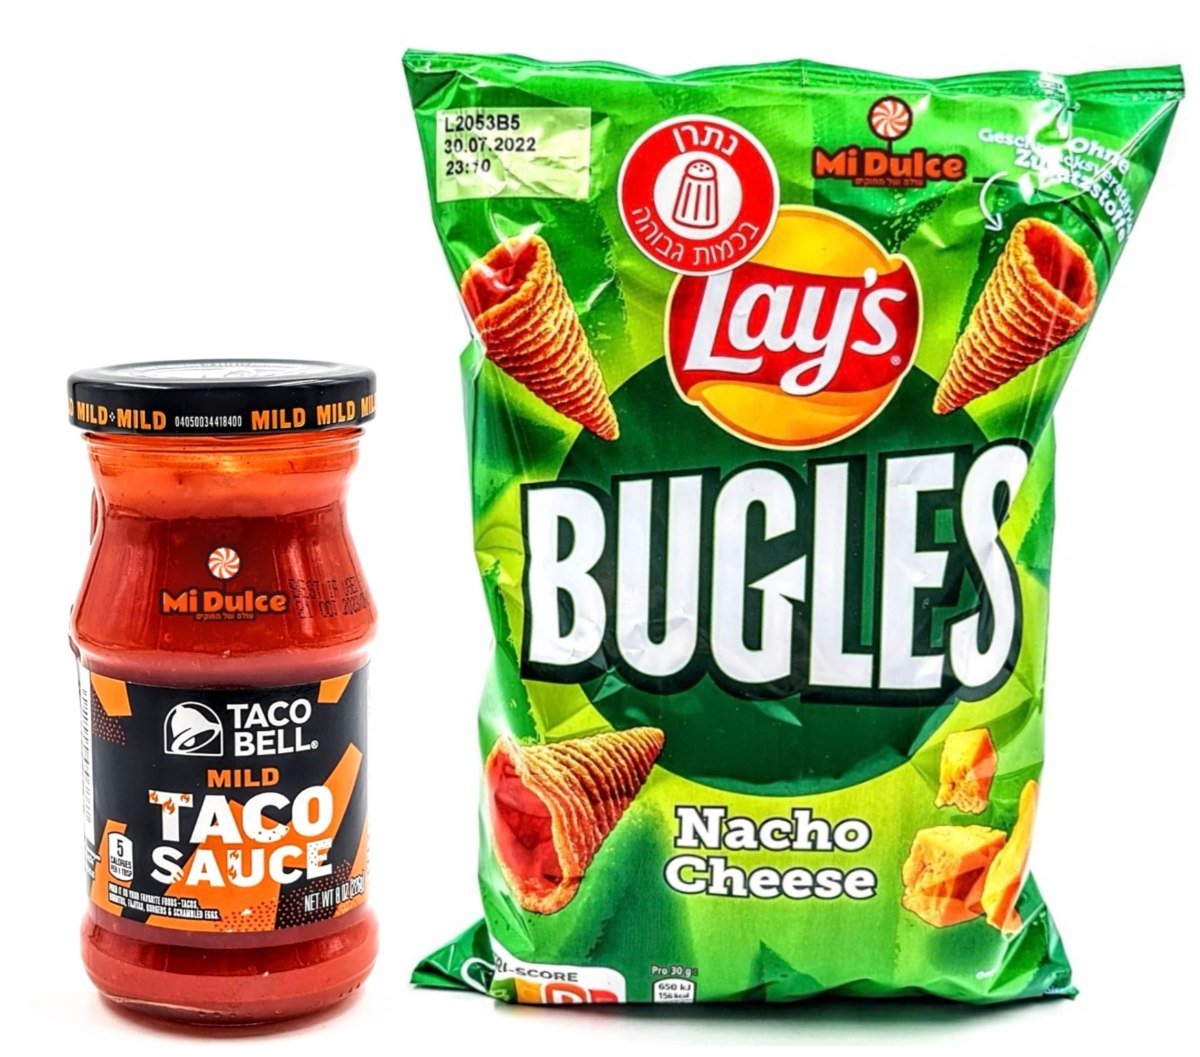 Lays Bugles + Taco Bell mild